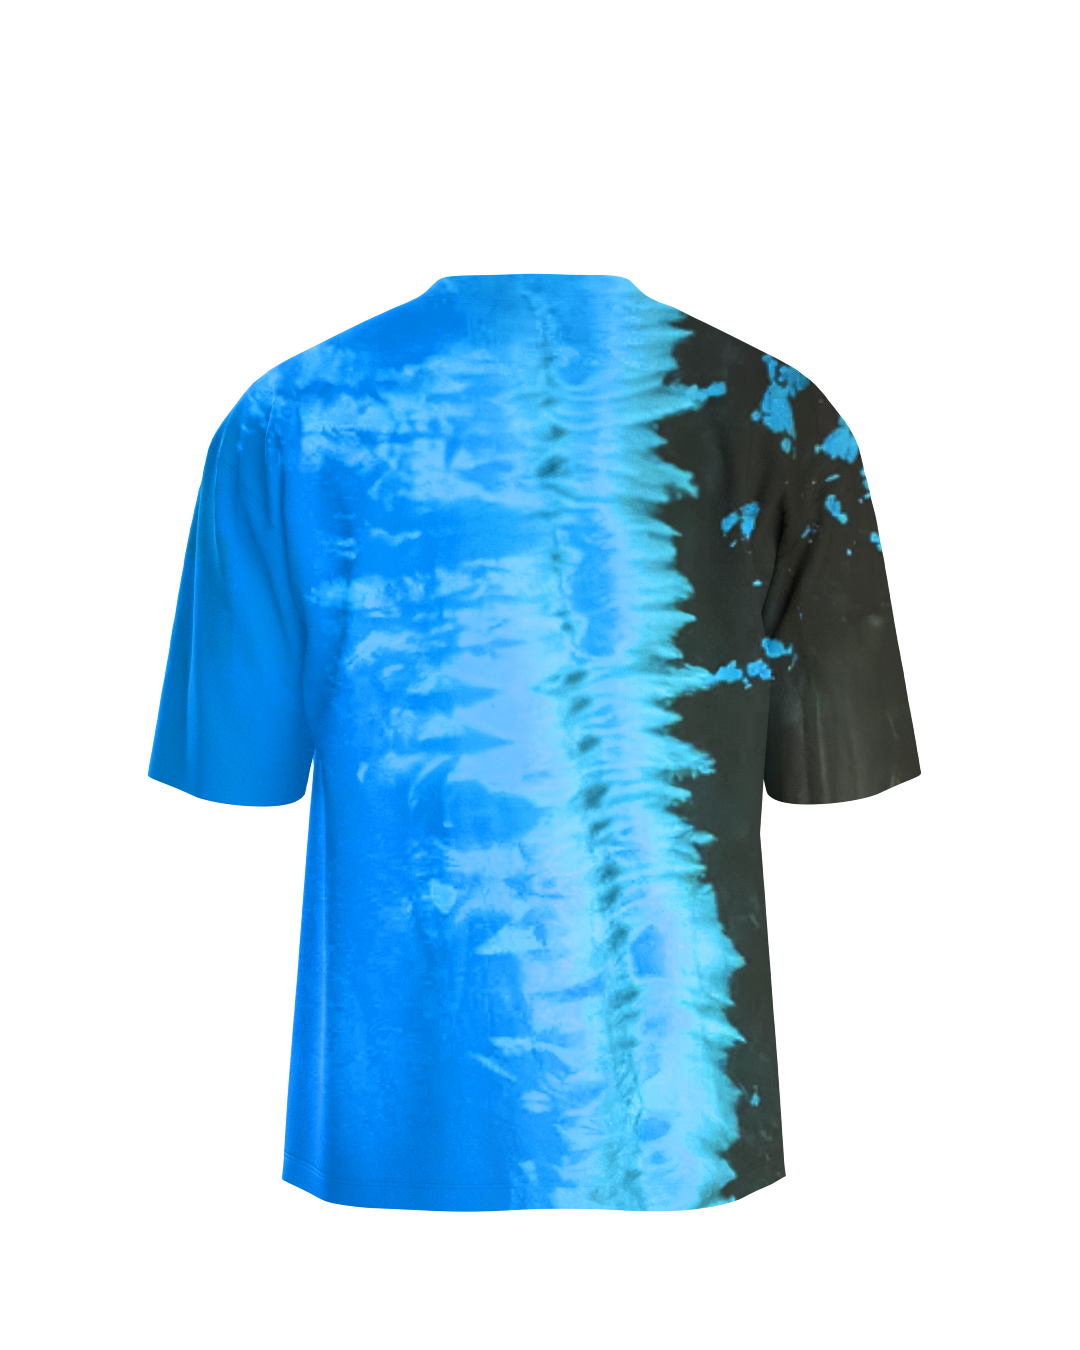 Acid Wash Blue T-Shirt